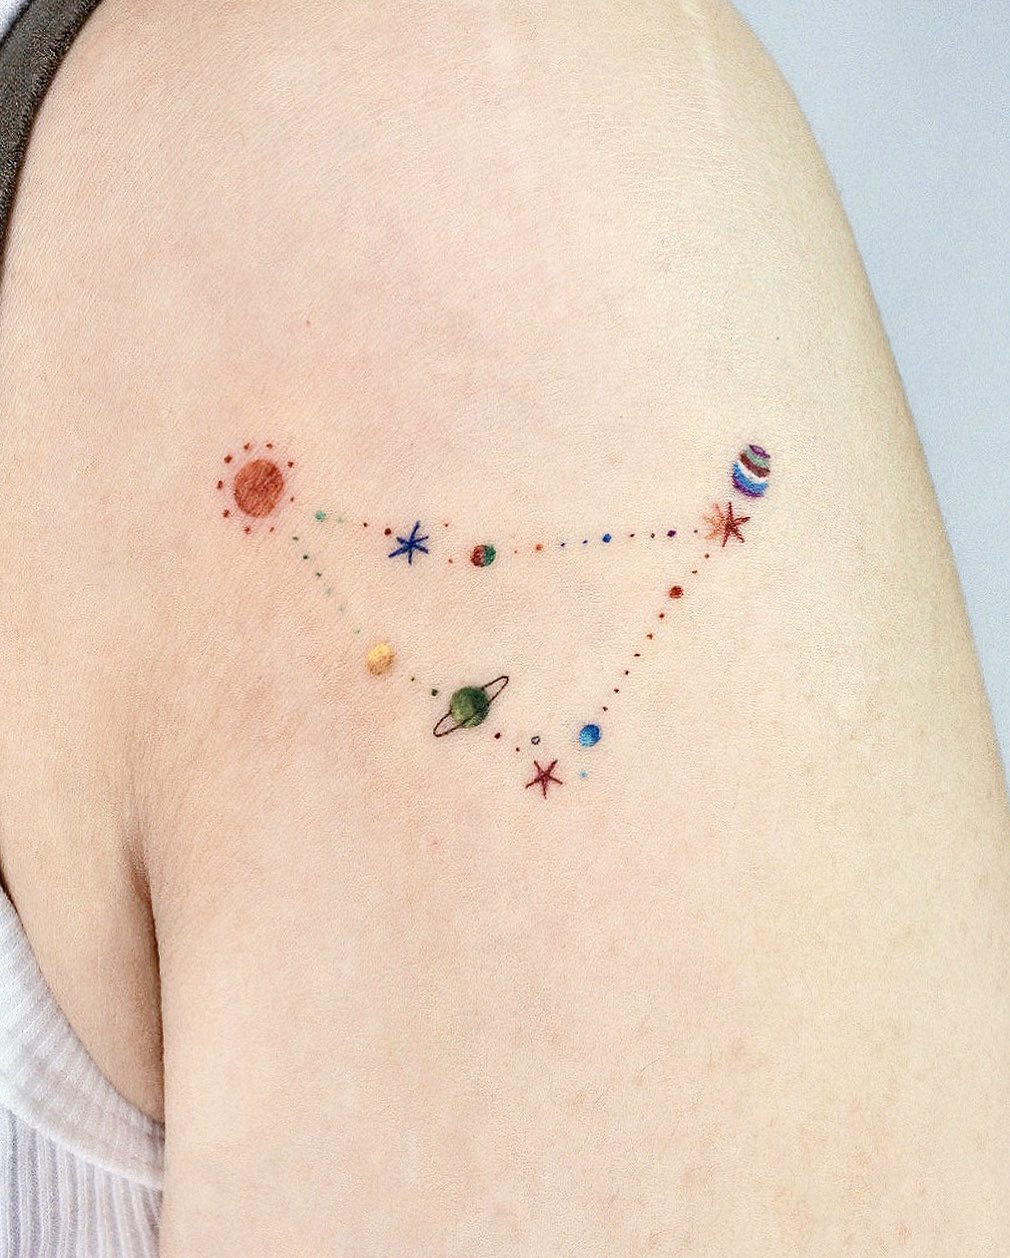 Stunning Sun Moon and Star Tattoo Inspiration | by Ari Mars | Medium